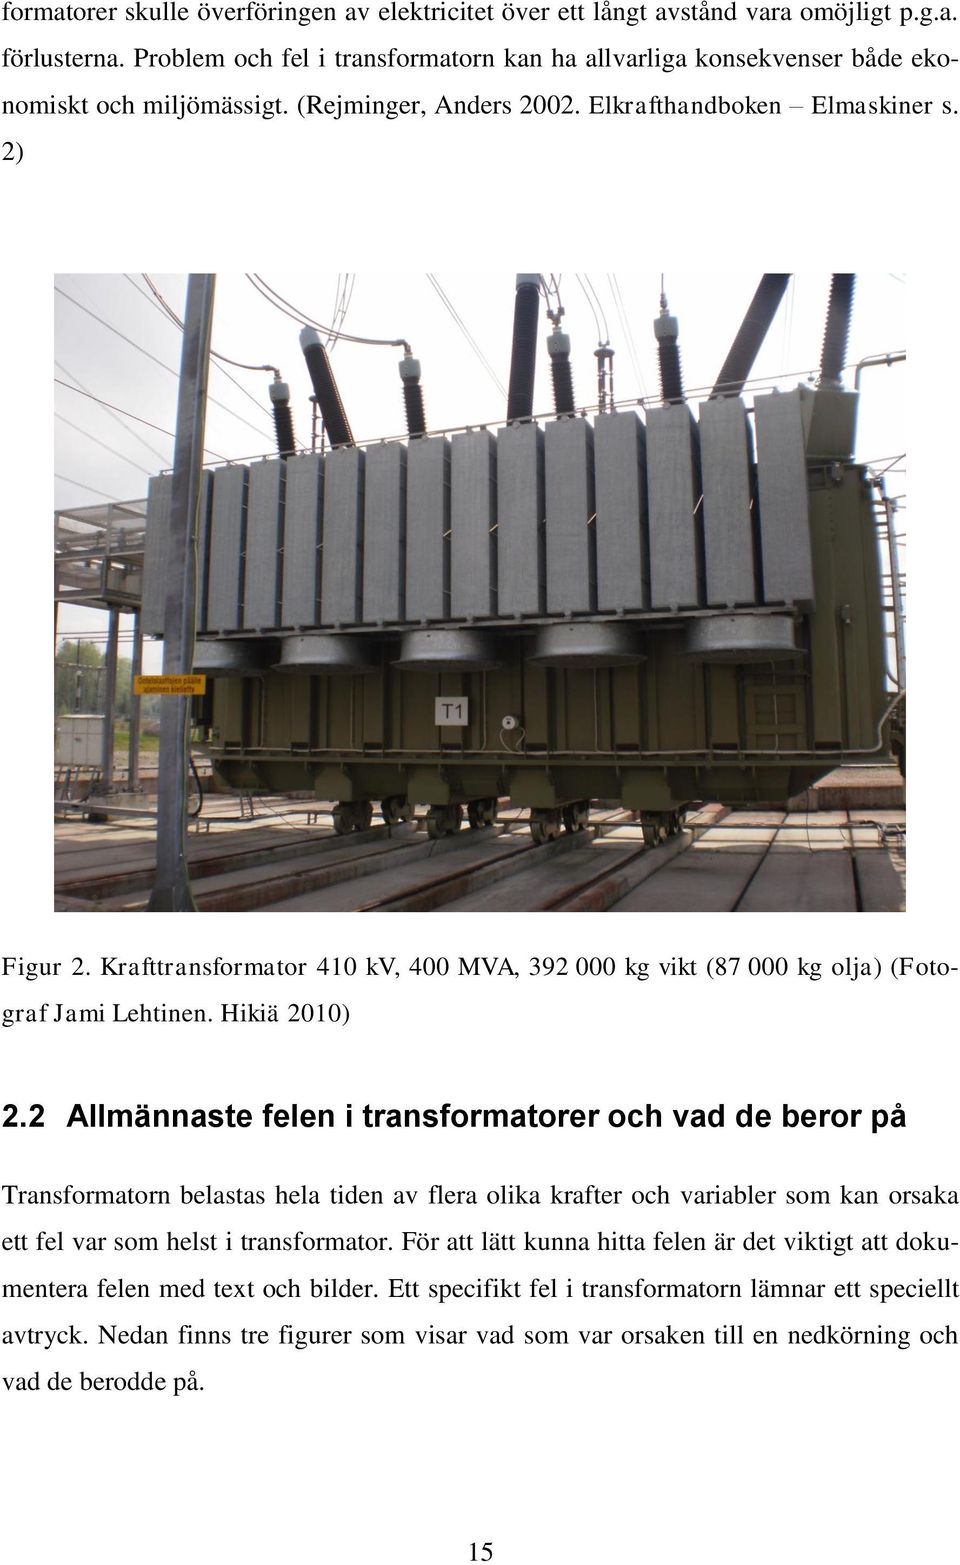 Krafttransformator 410 kv, 400 MVA, 392 000 kg vikt (87 000 kg olja) (Fotograf Jami Lehtinen. Hikiä 2010) 2.